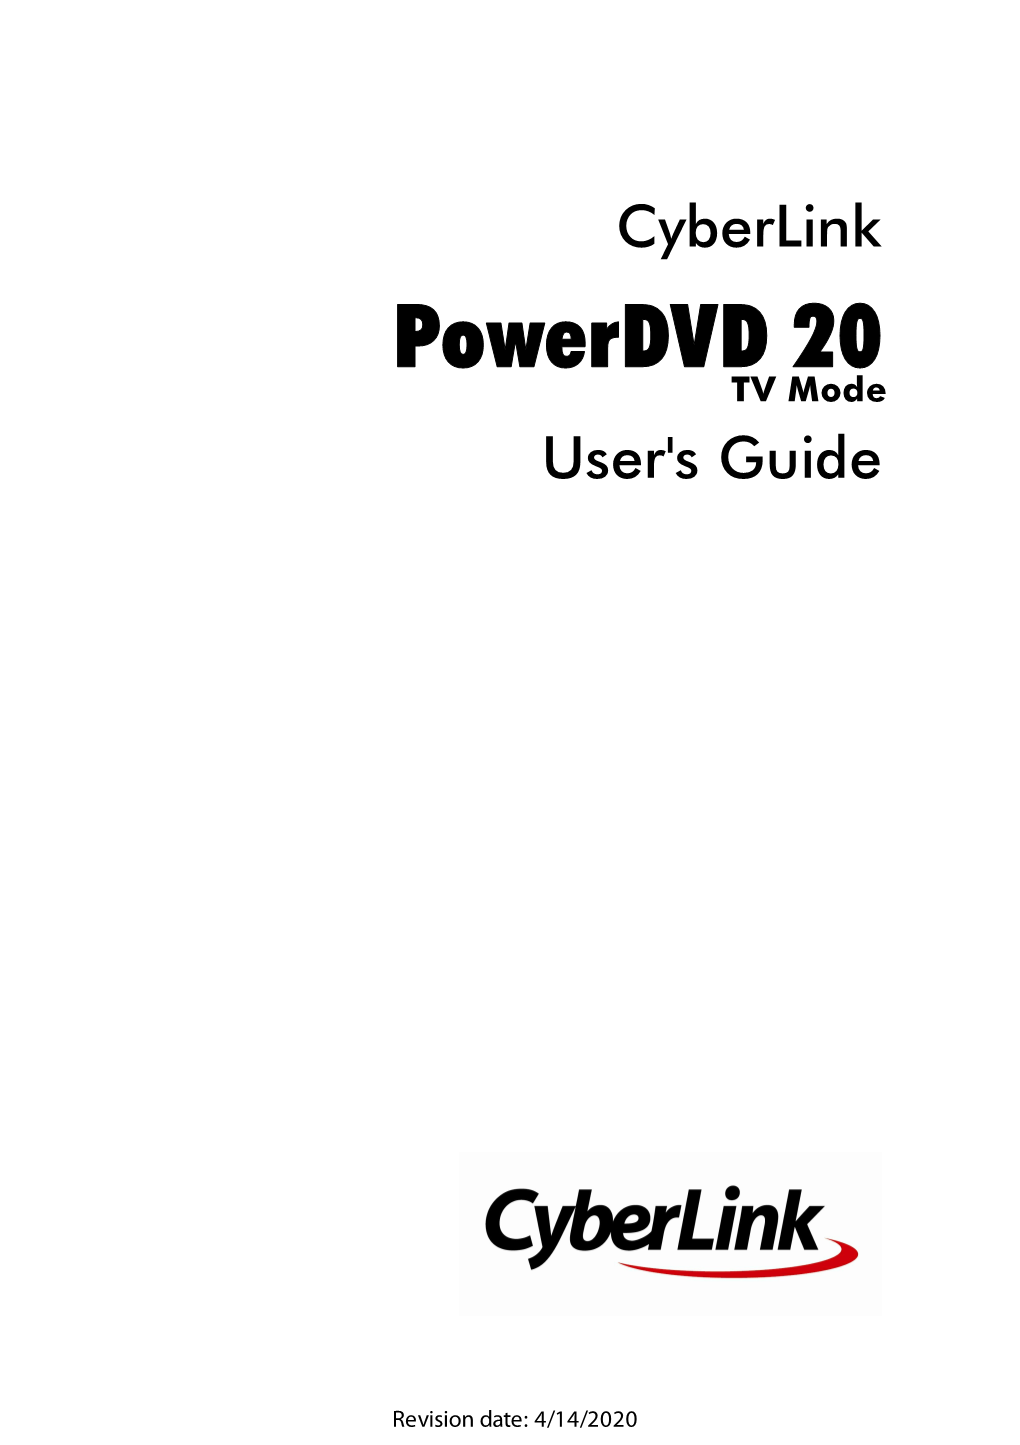 Powerdvd 20 TV Mode User's Guide